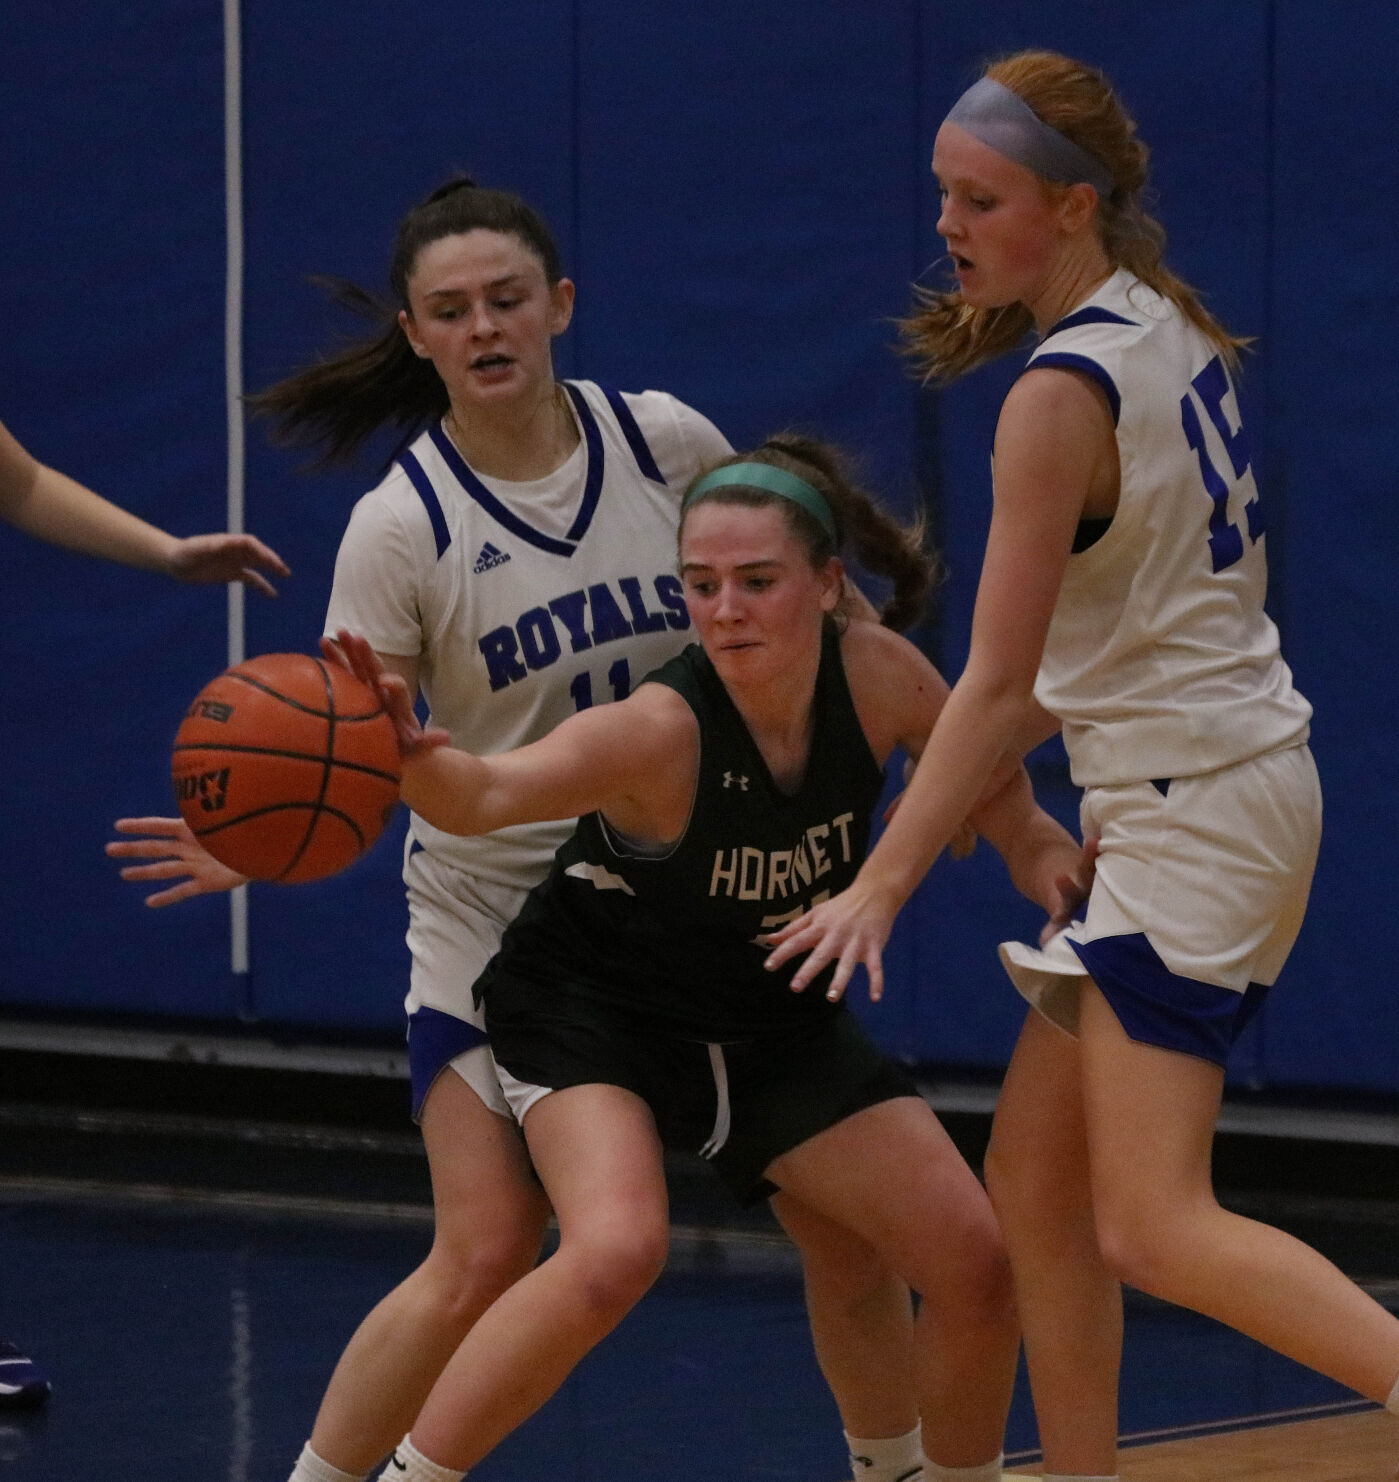 Georgetown Girls Basketball Team Battles Hard but Falls Short Against North Reading